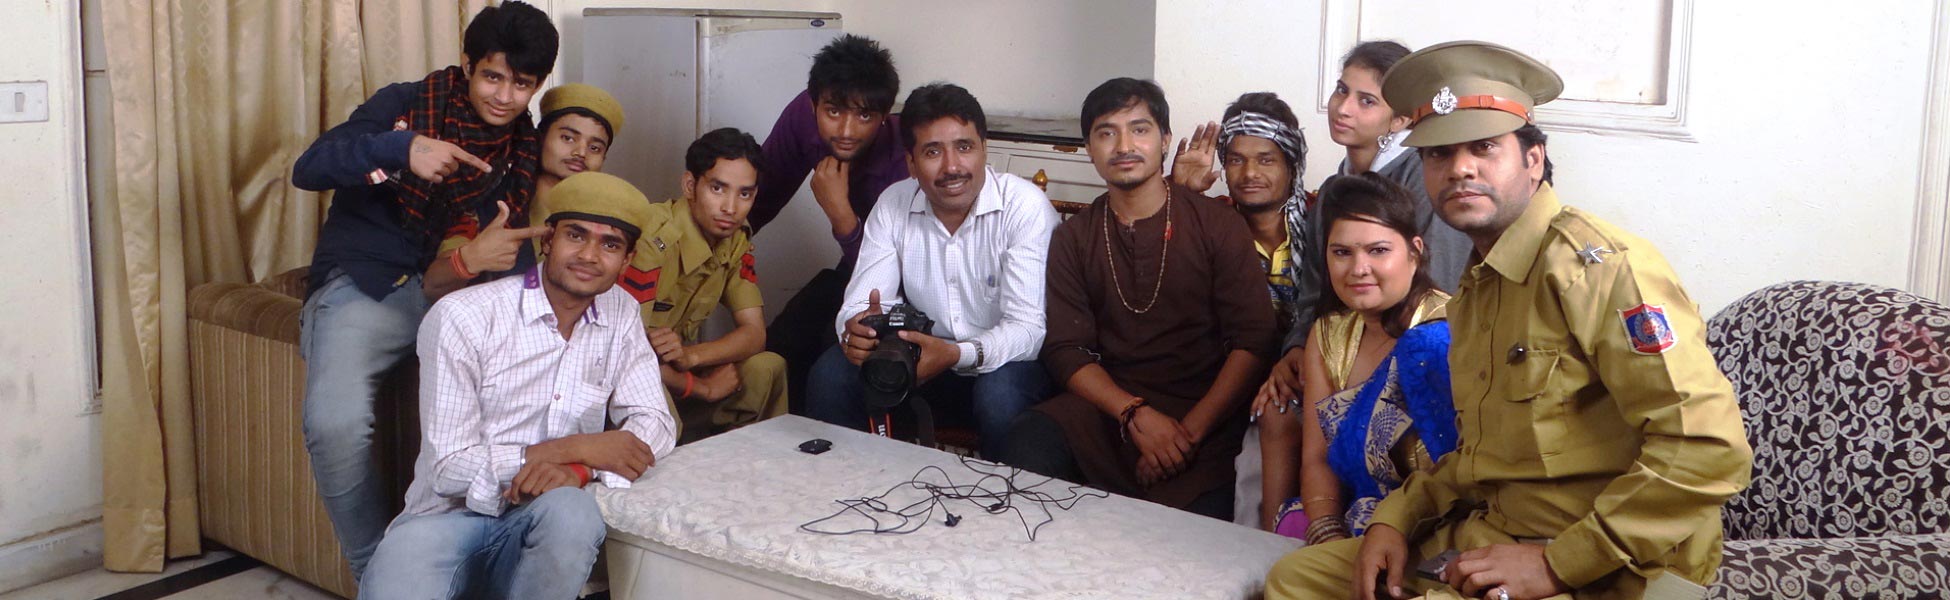 film production services in india, film production services in haryana, film production services in sonipat